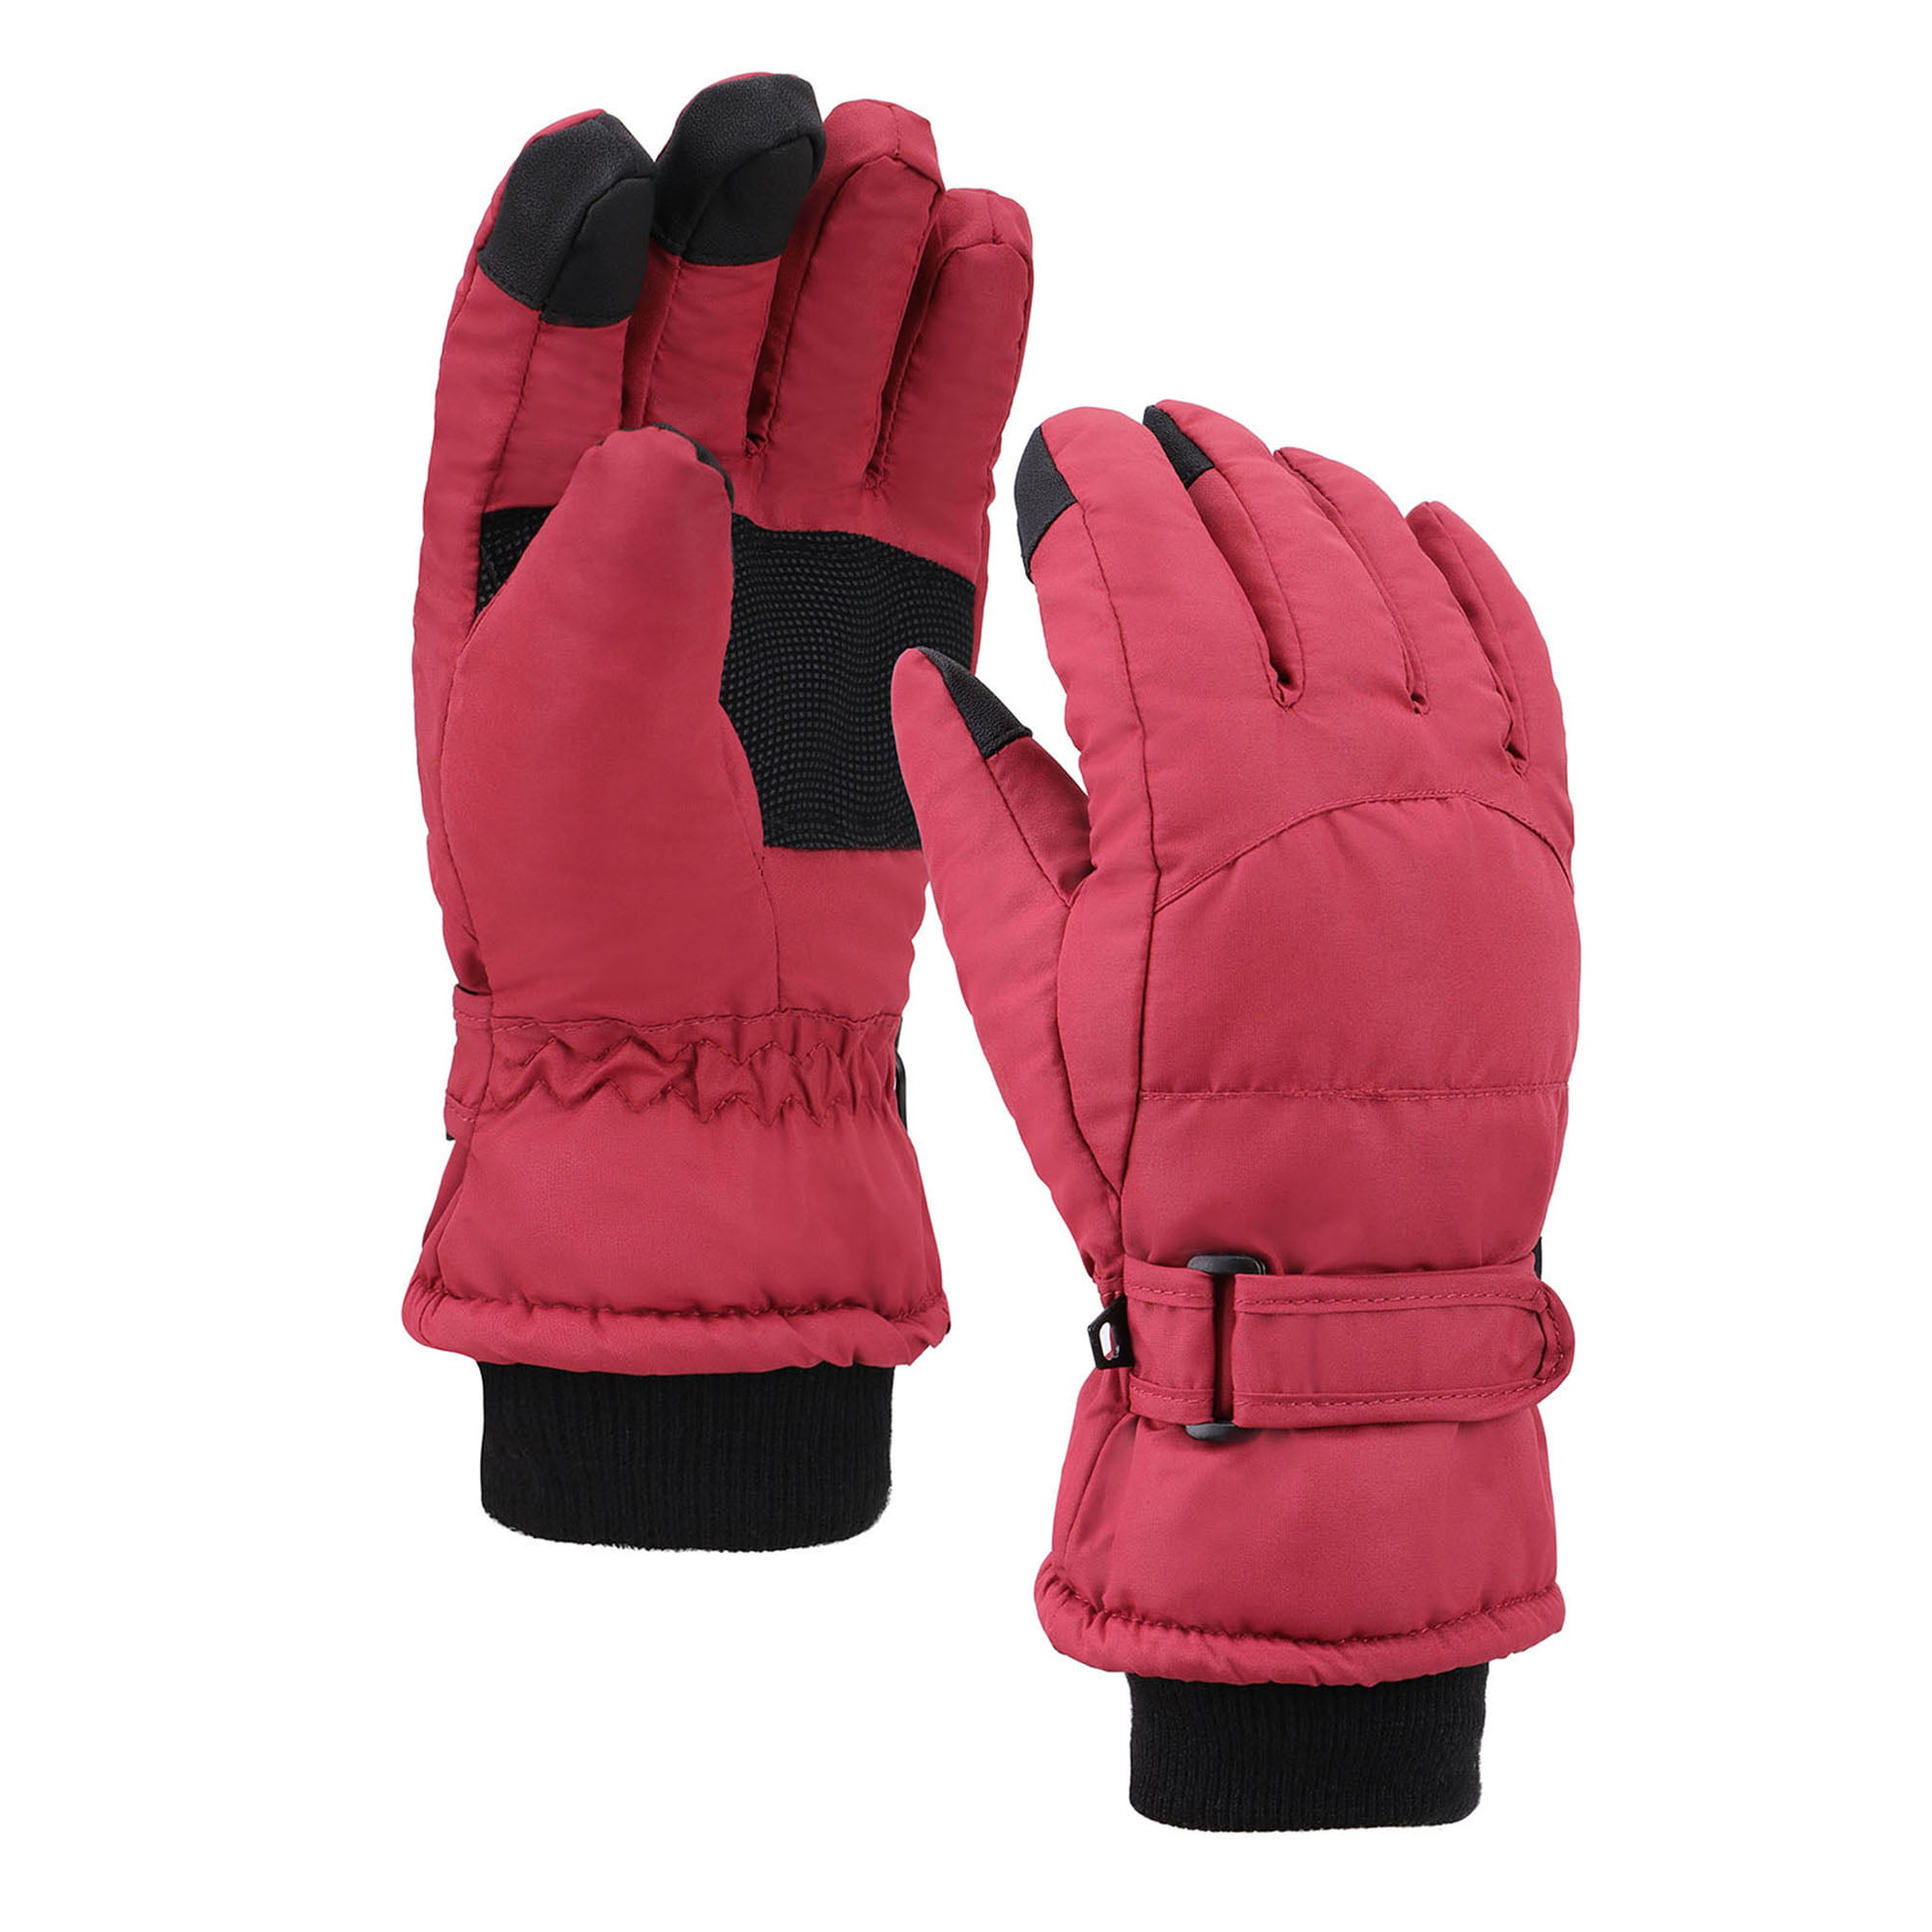 ANDORRA Women's Night Galaxy Waterproof Touchscreen Snow Gloves PURPLE SMALL 